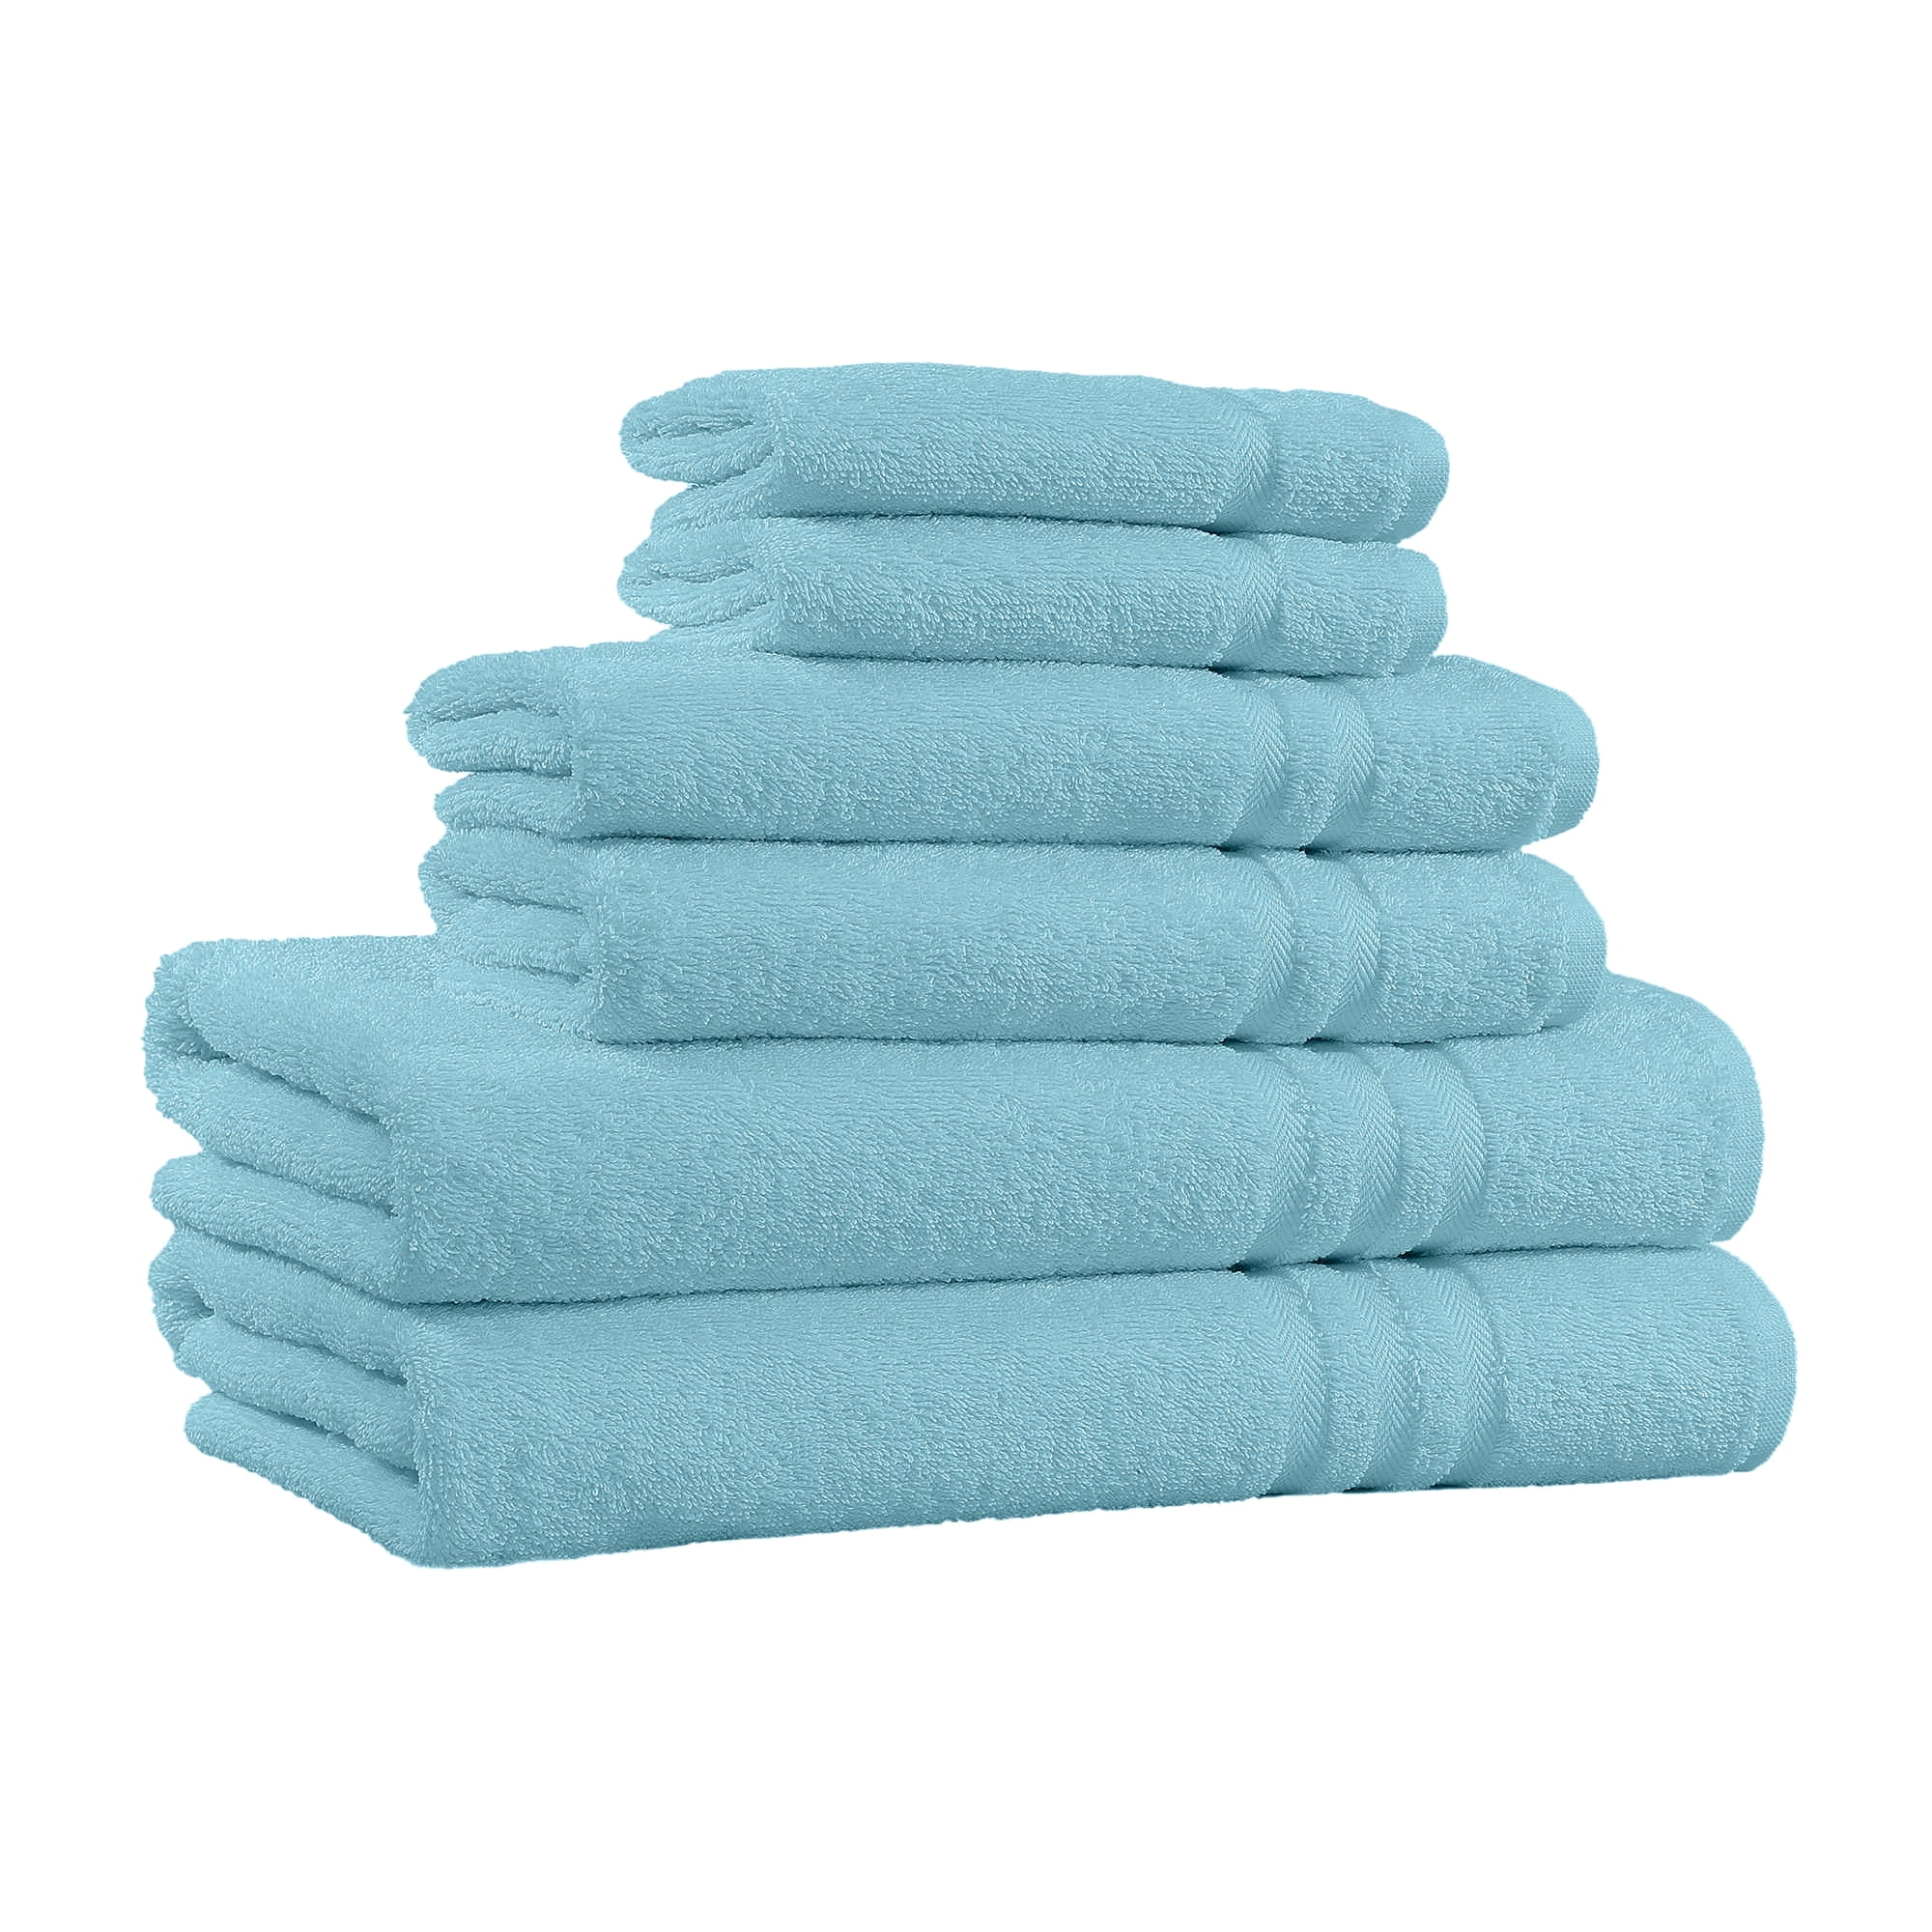 Cotton Wash Cloths 13x13 for Baby Hotel Bathroom Kitchen Gym Sports 650gsm Bulk 